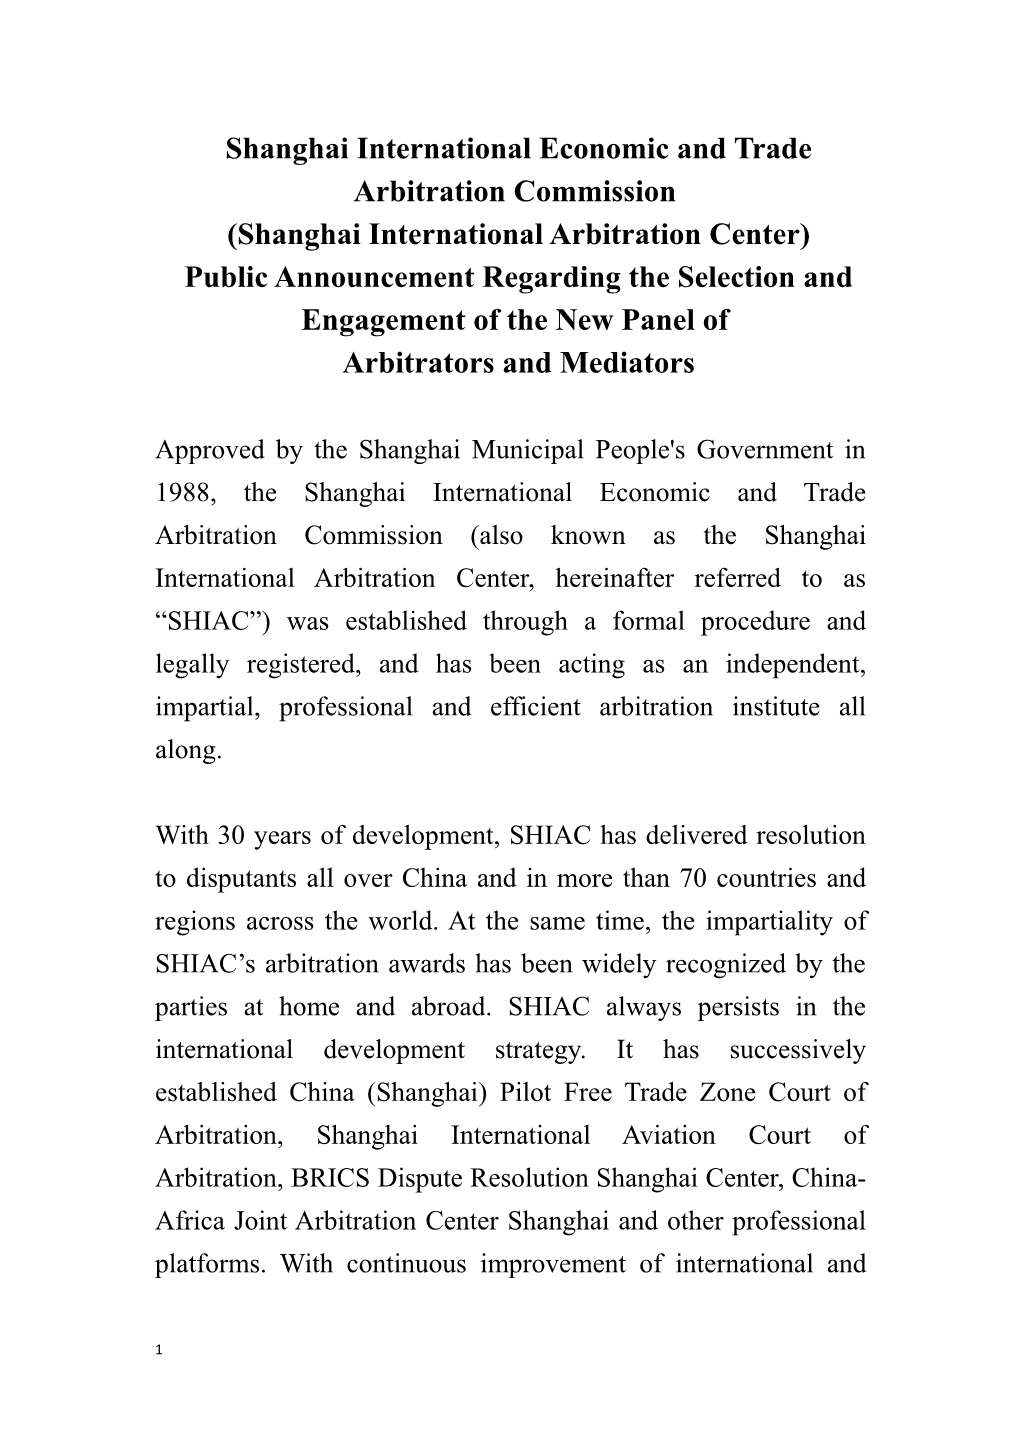 Shanghai International Economic and Trade Arbitration Commission